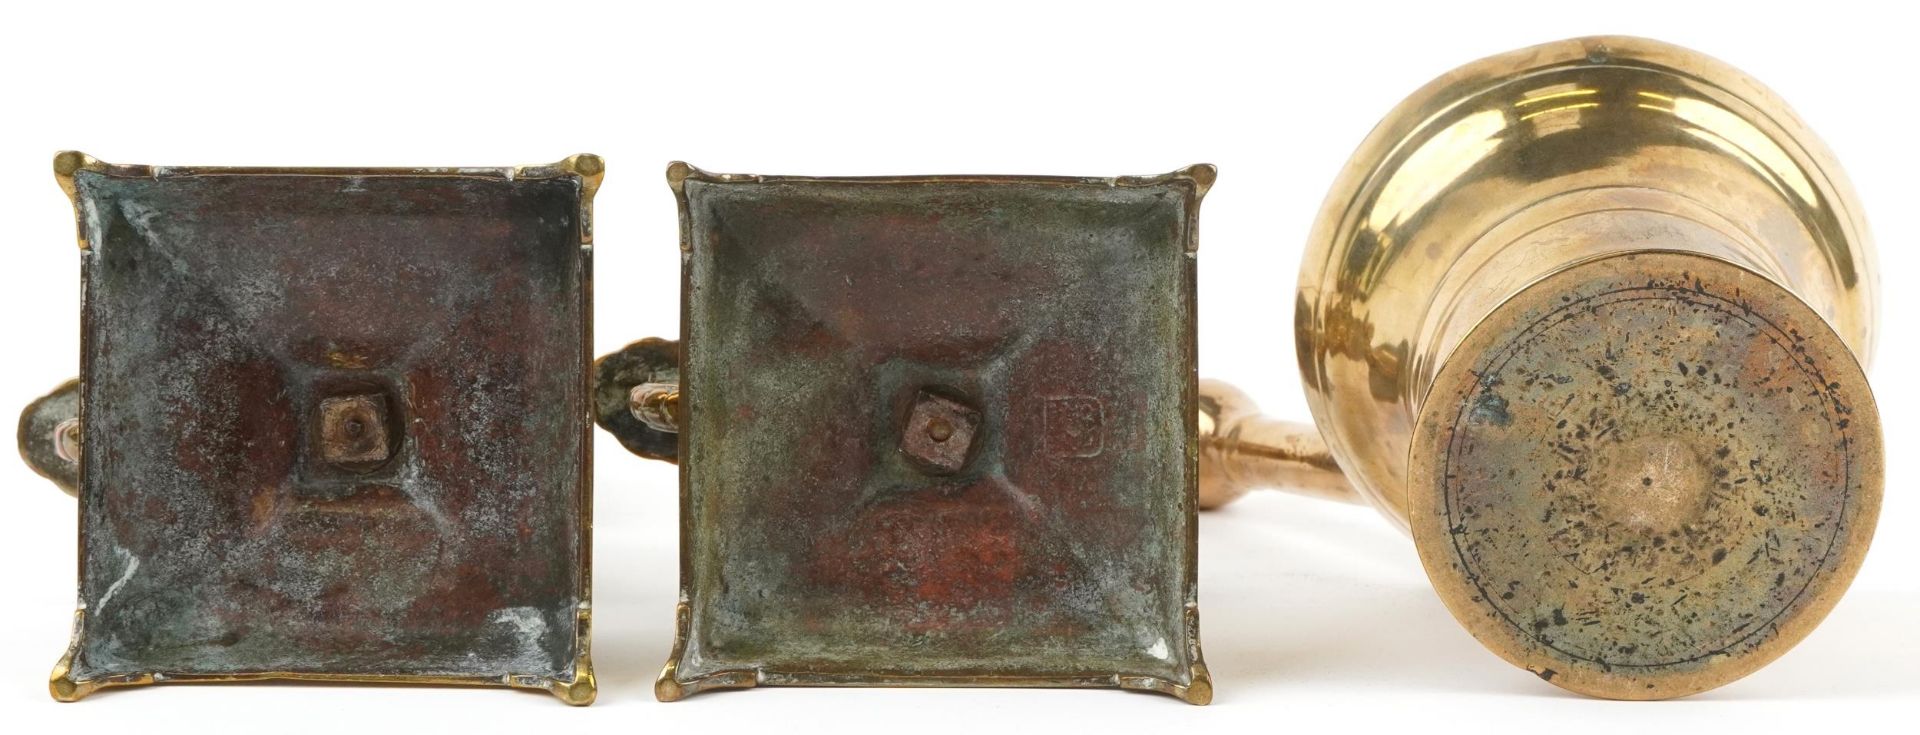 Antique bronze pestle & mortar and pair of dragon design candlesticks, the largest 19,5cm high - Bild 3 aus 3